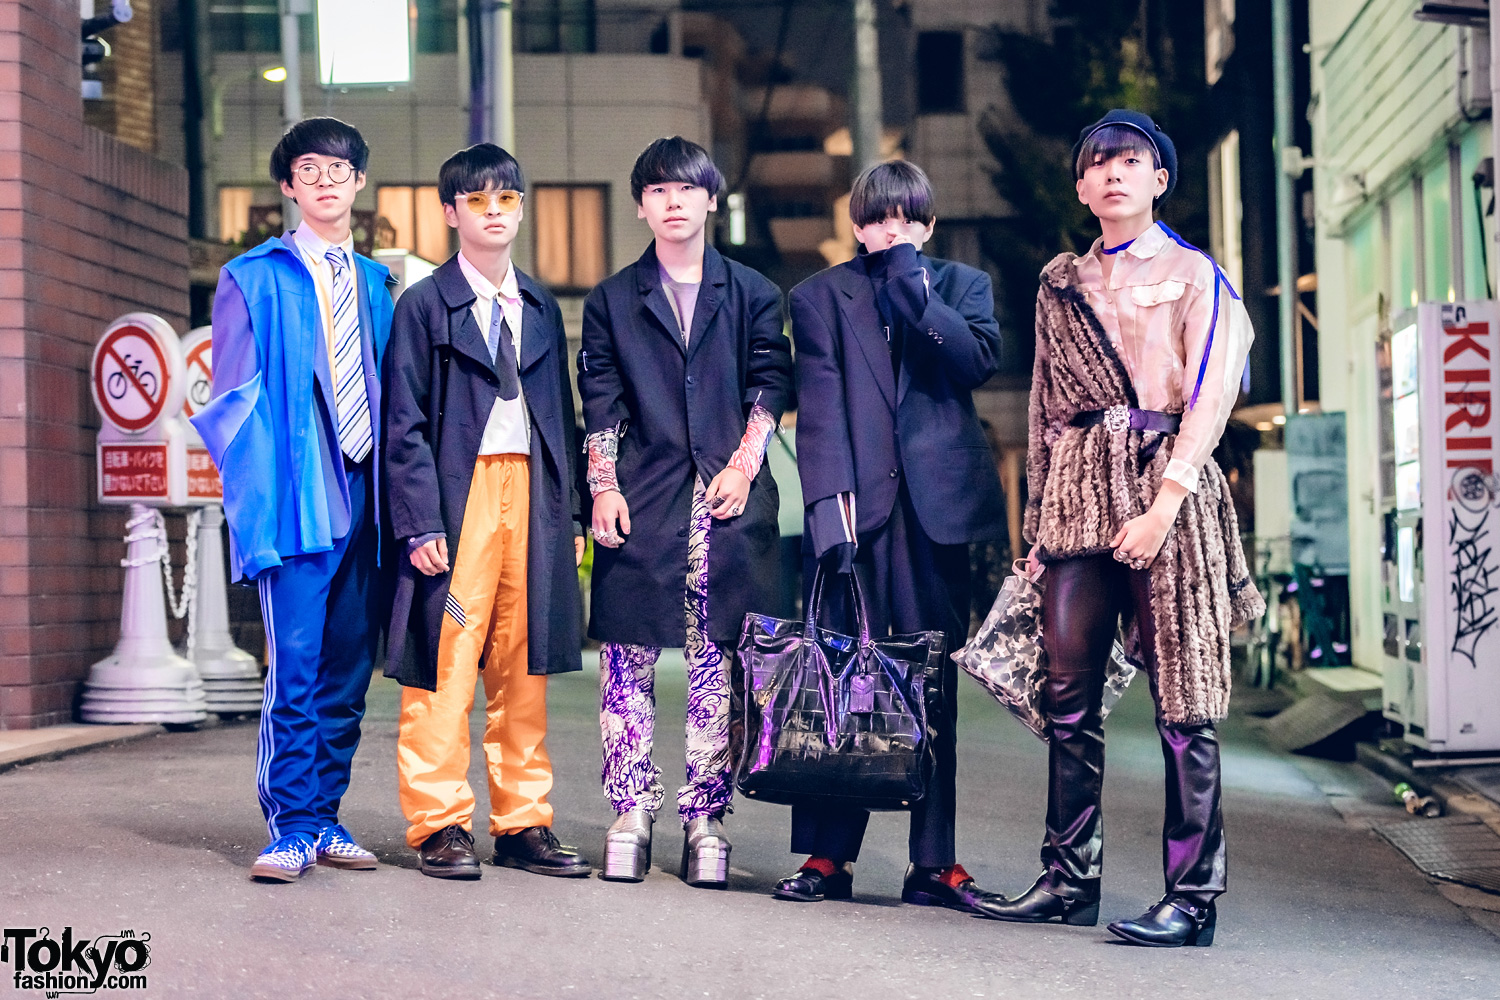 Harajuku Boy Group in Outerwear Street Styles w/ CDG, Adidas, Christian Dior, Vivienne Westwood, Vans, Dr. Martens, New Balance, Porter, LV, Versace & Fulioati